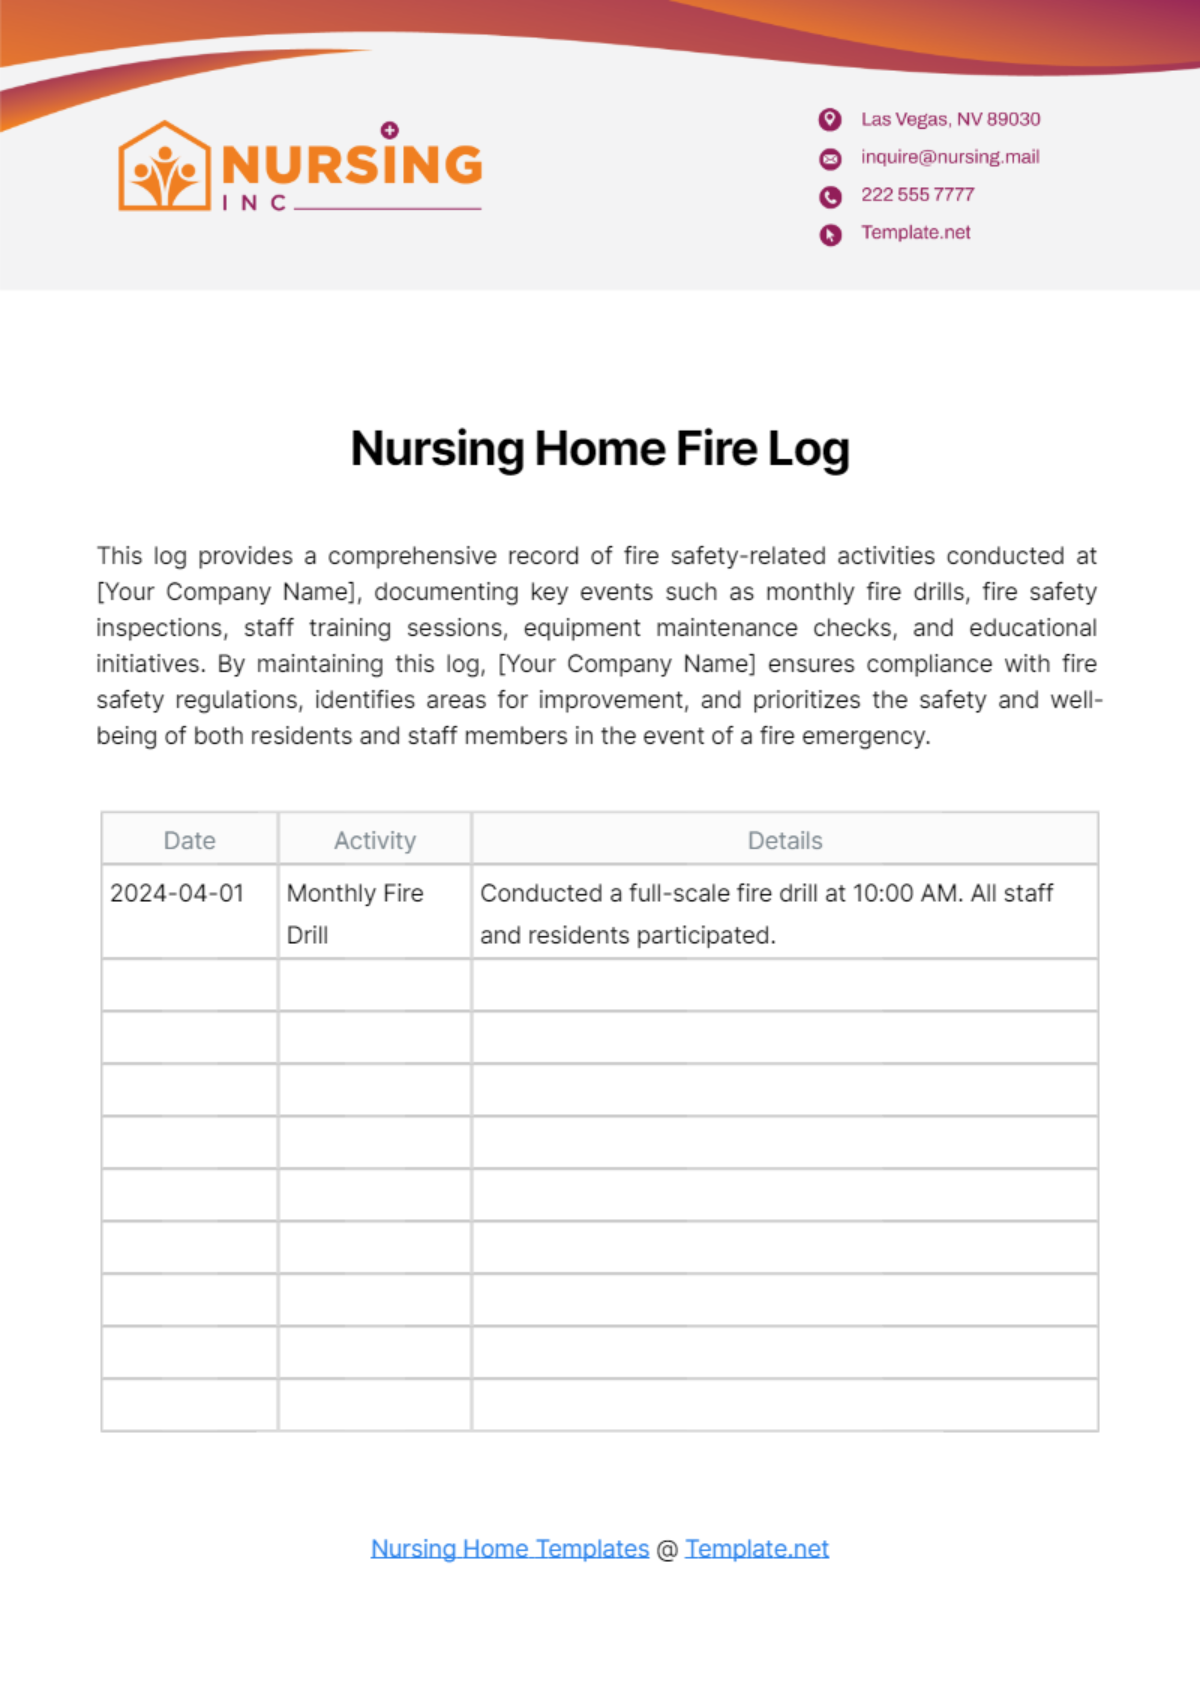 Nursing Home Fire Log Template